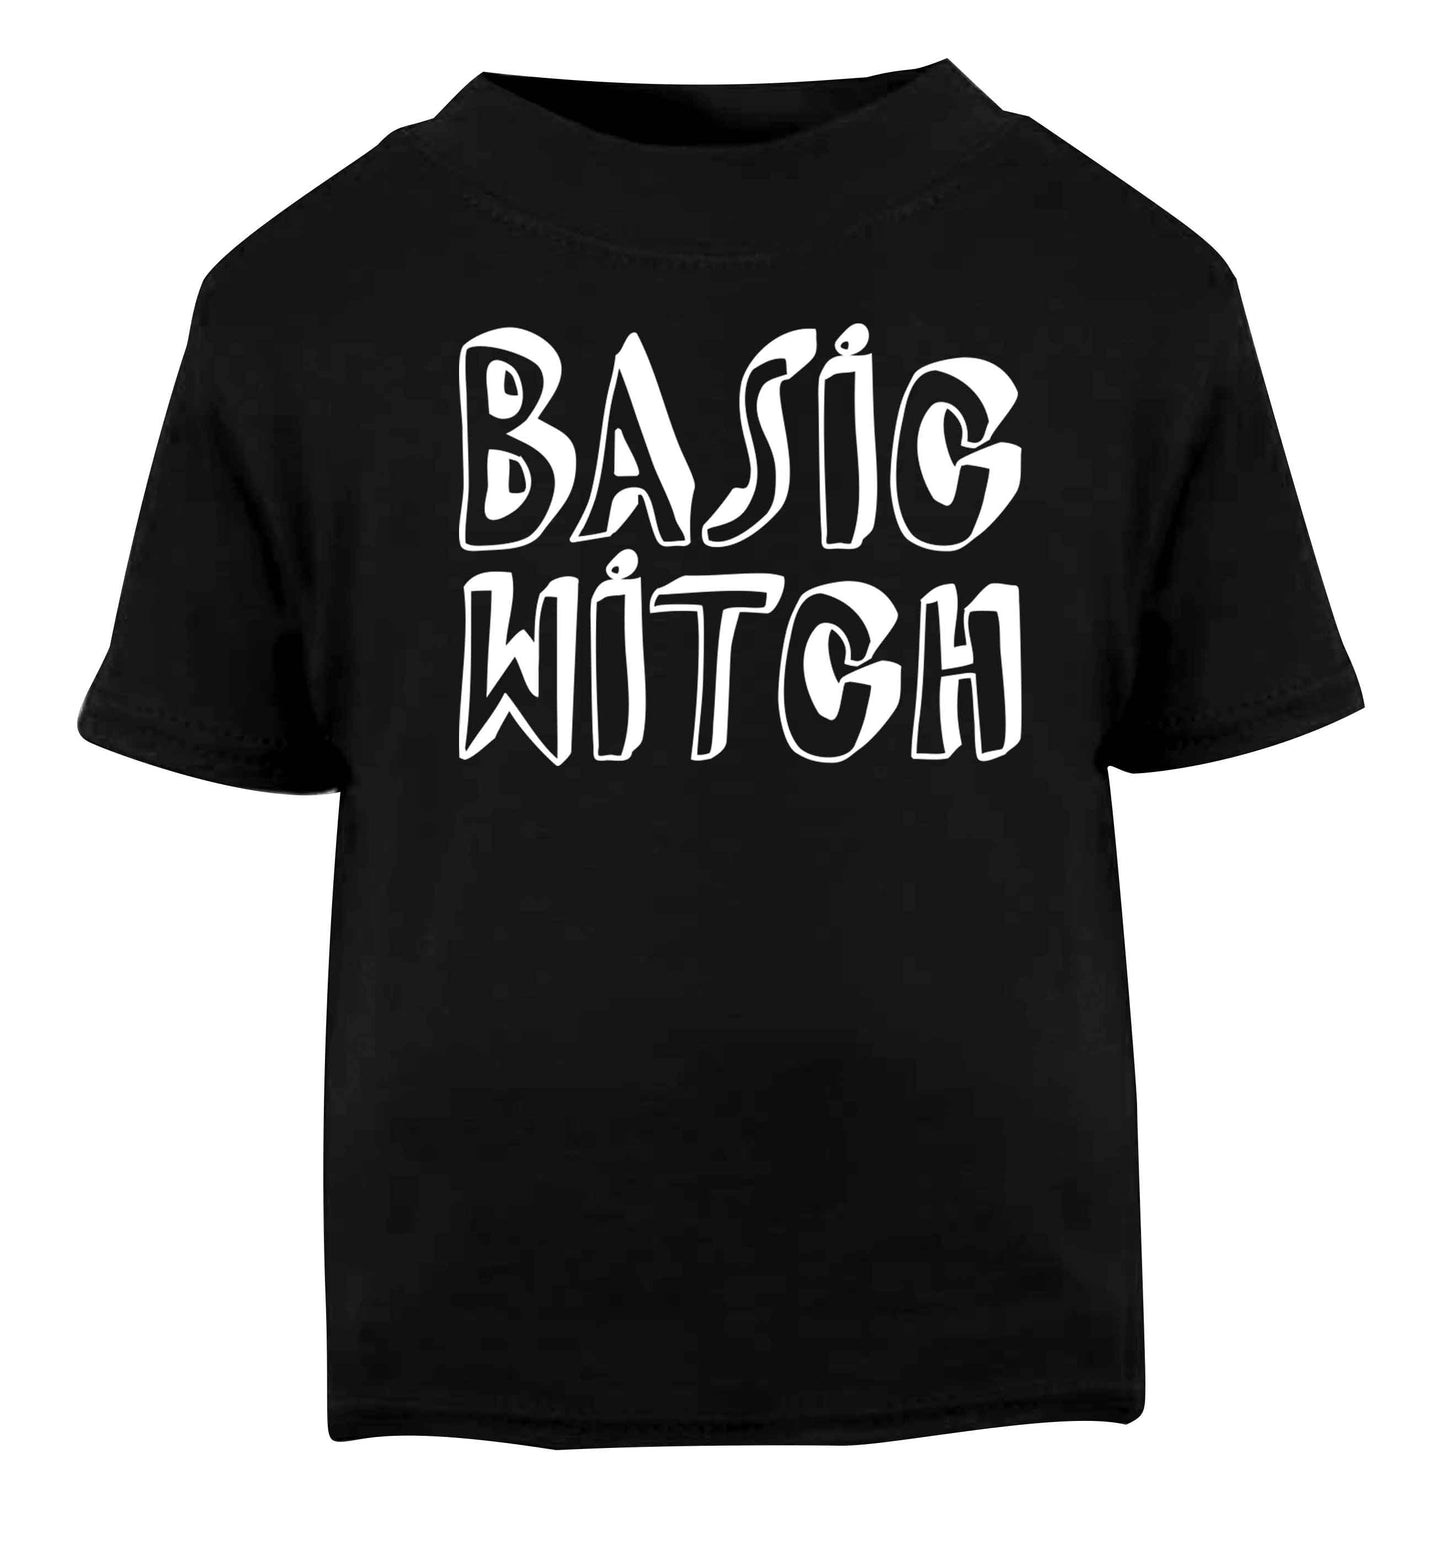 Basic witch Black baby toddler Tshirt 2 years